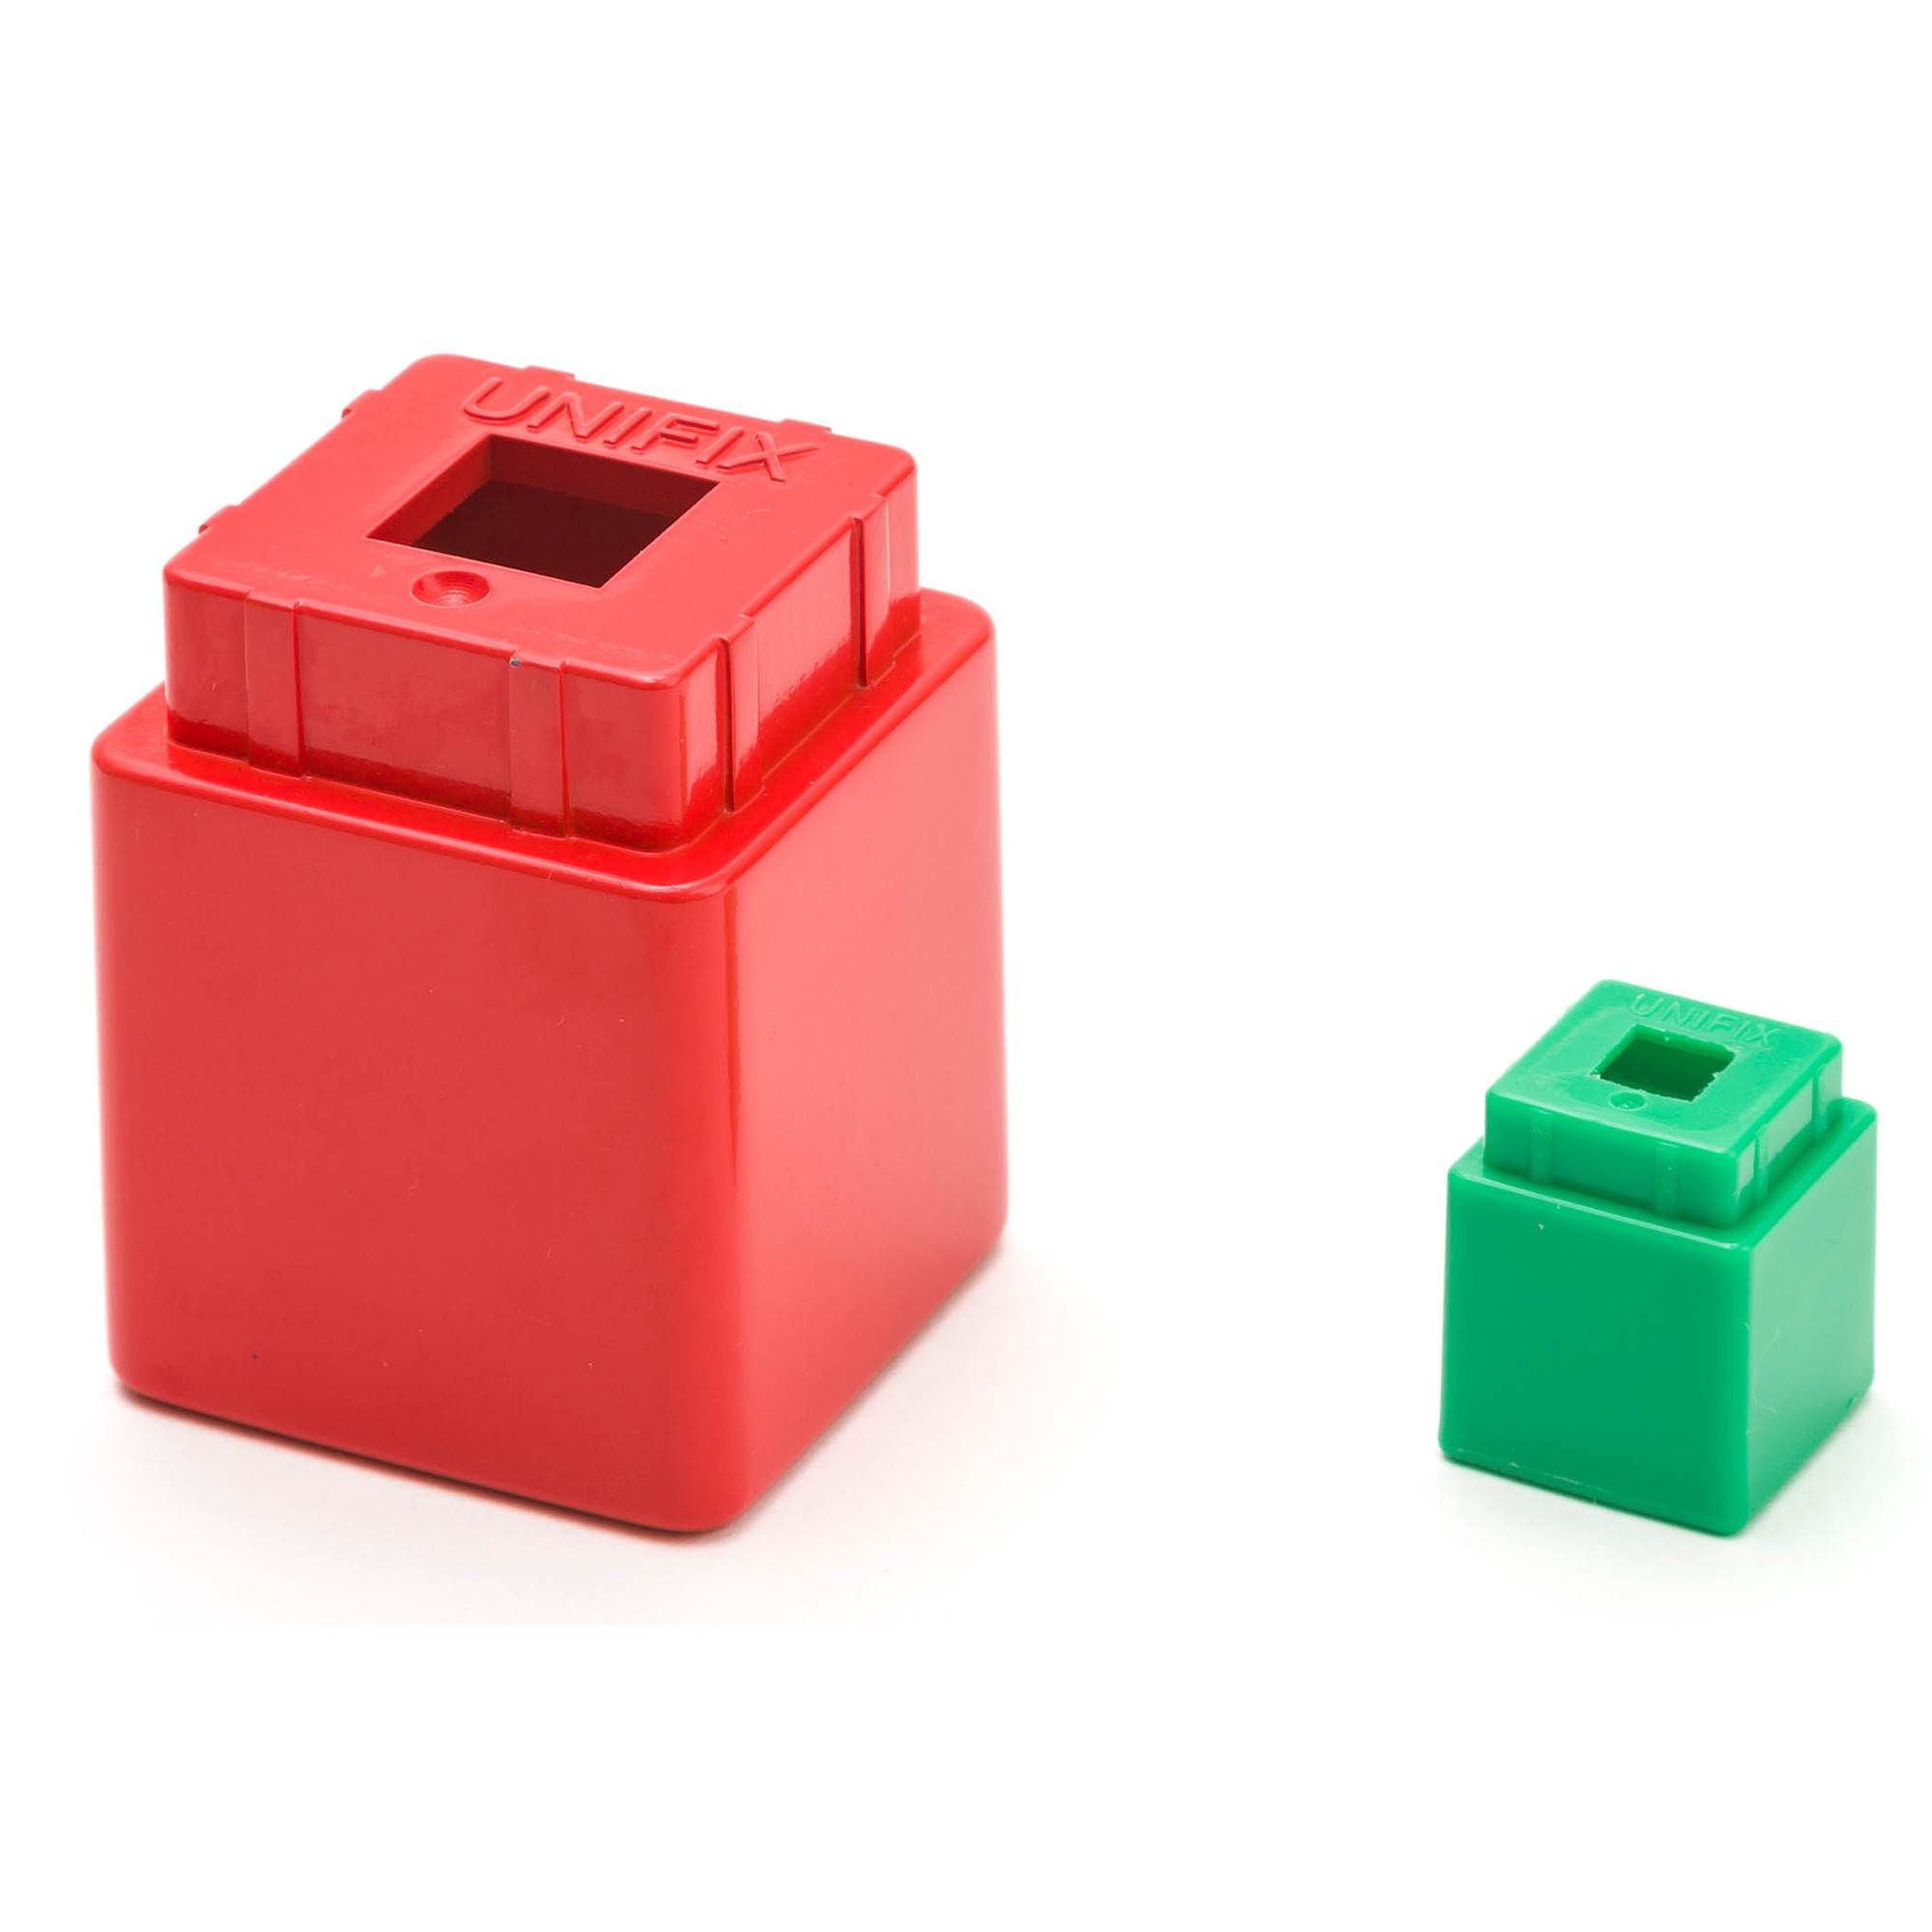 Jumbo Unifix Cubes, Set of 20